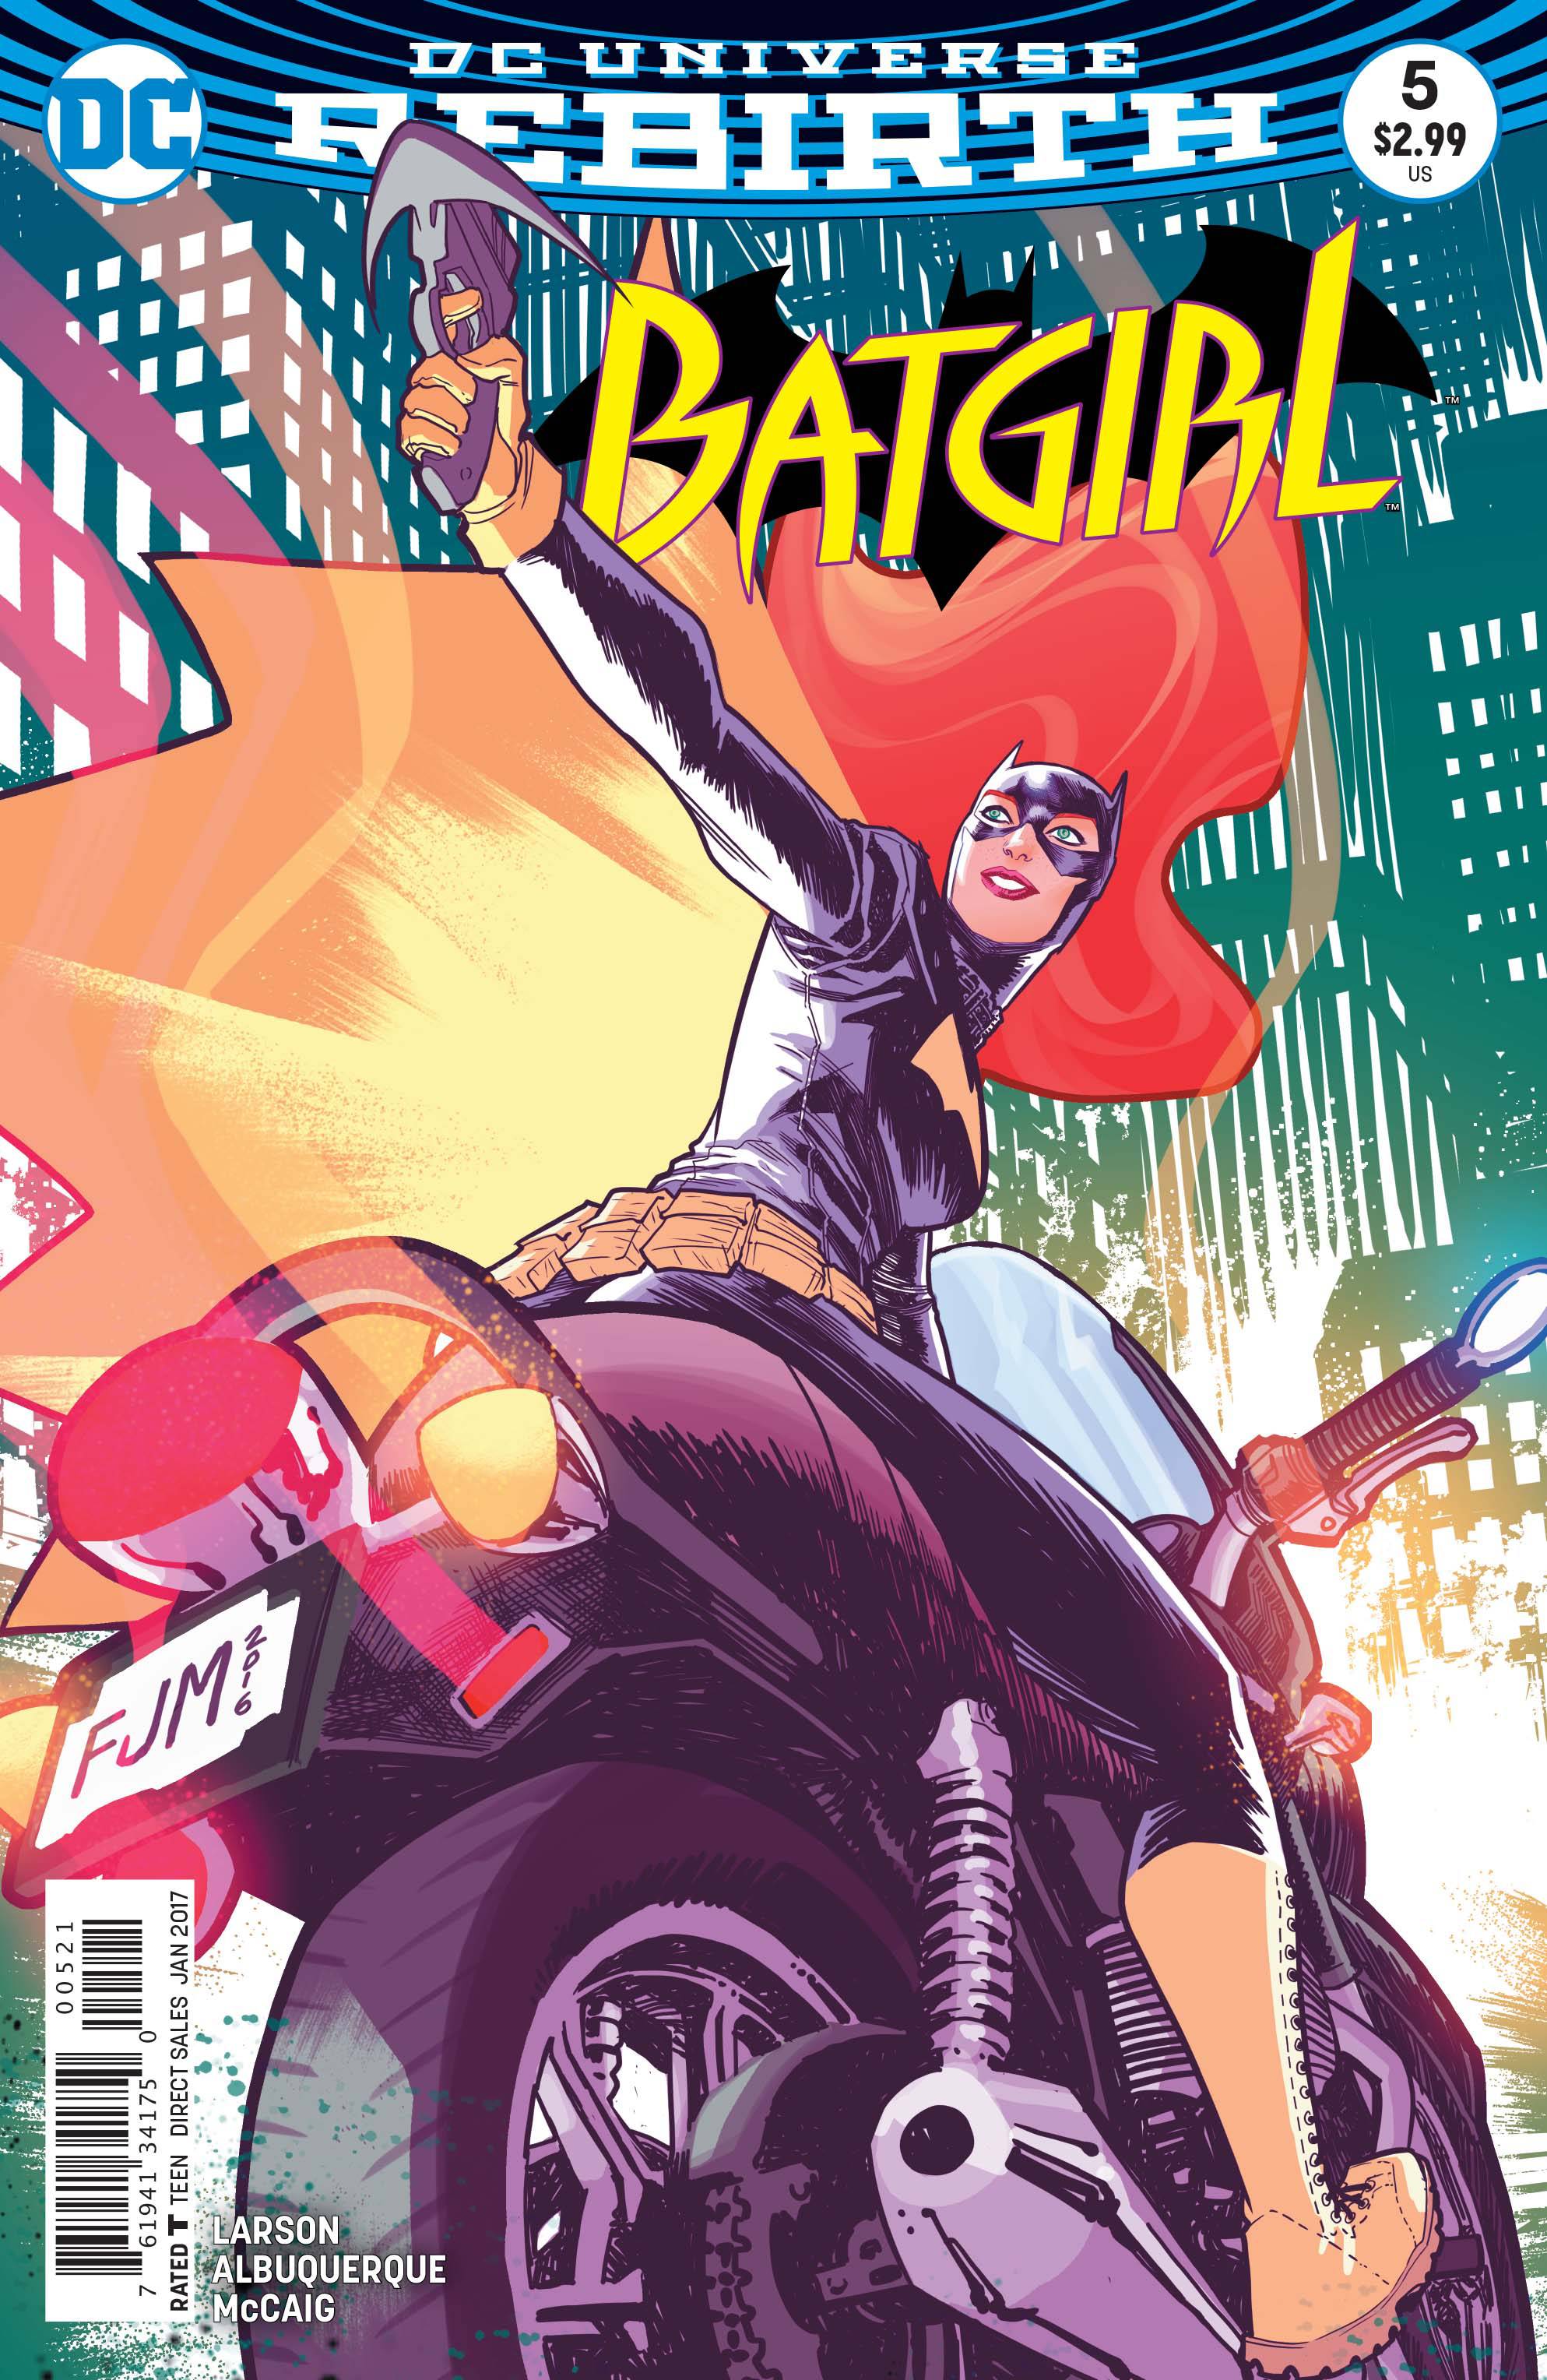 Batgirl #5 Variant Edition (2016)